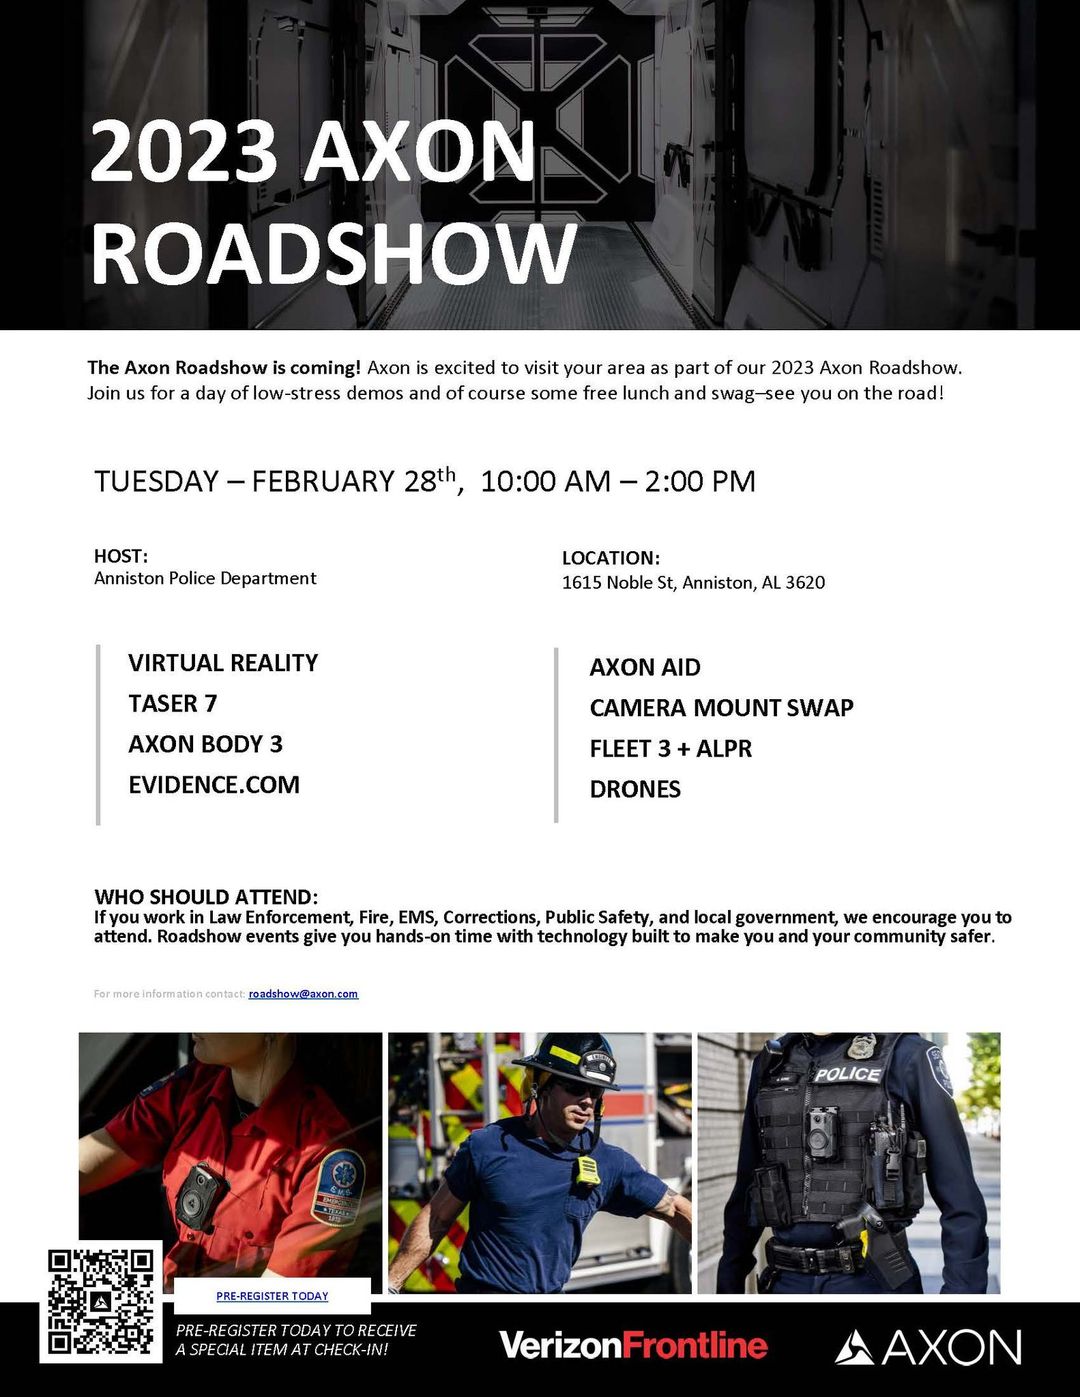 Anniston PD hosting 2023 AXON Roadshow on February 28!